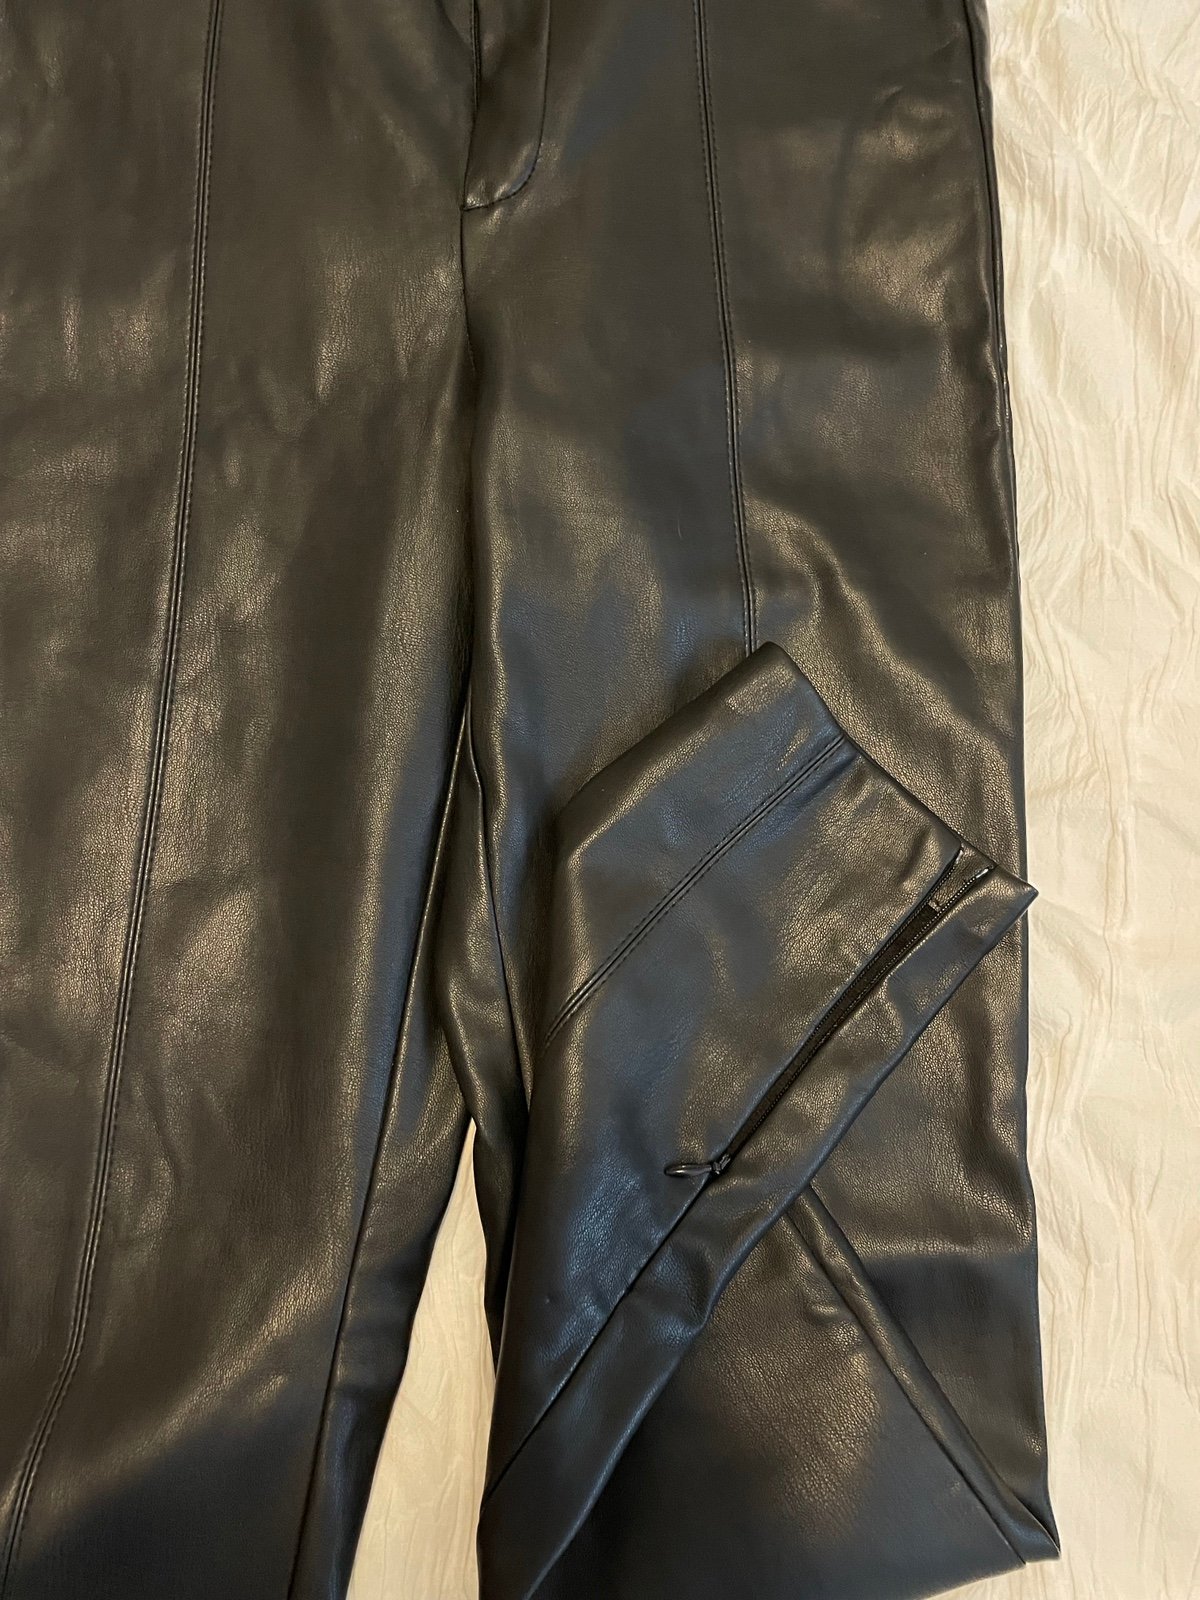 Popular Zara Leather Pants hJ6TQz0KS Cool